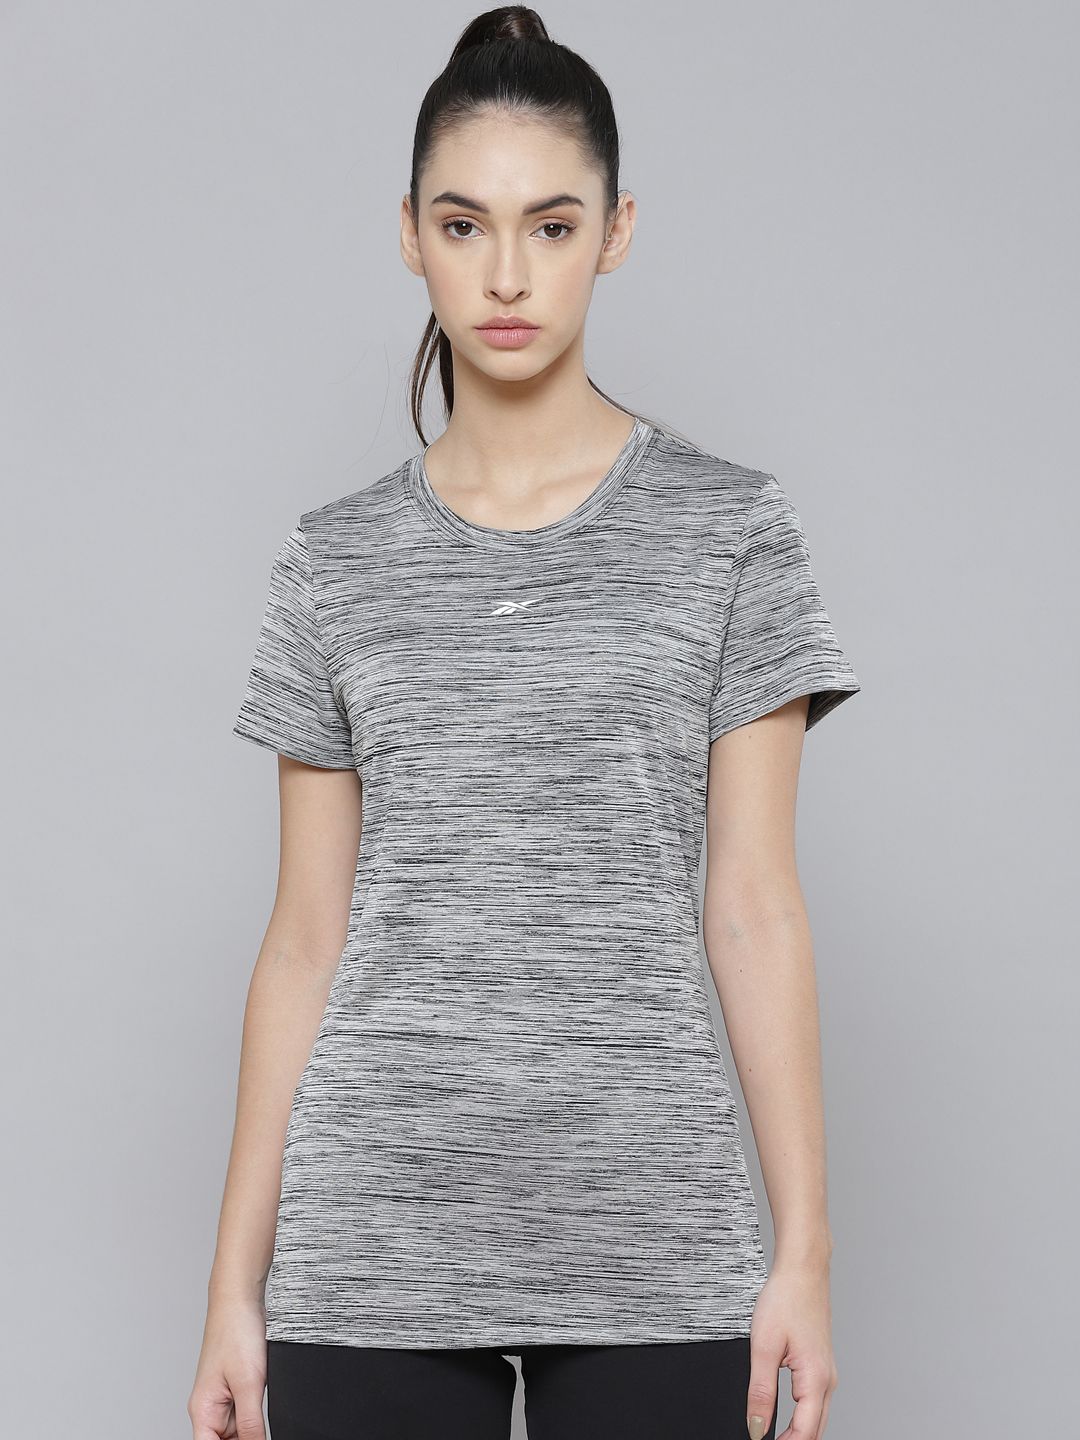 Reebok Women Grey & Black CT Slim Fit Training T-shirt Price in India